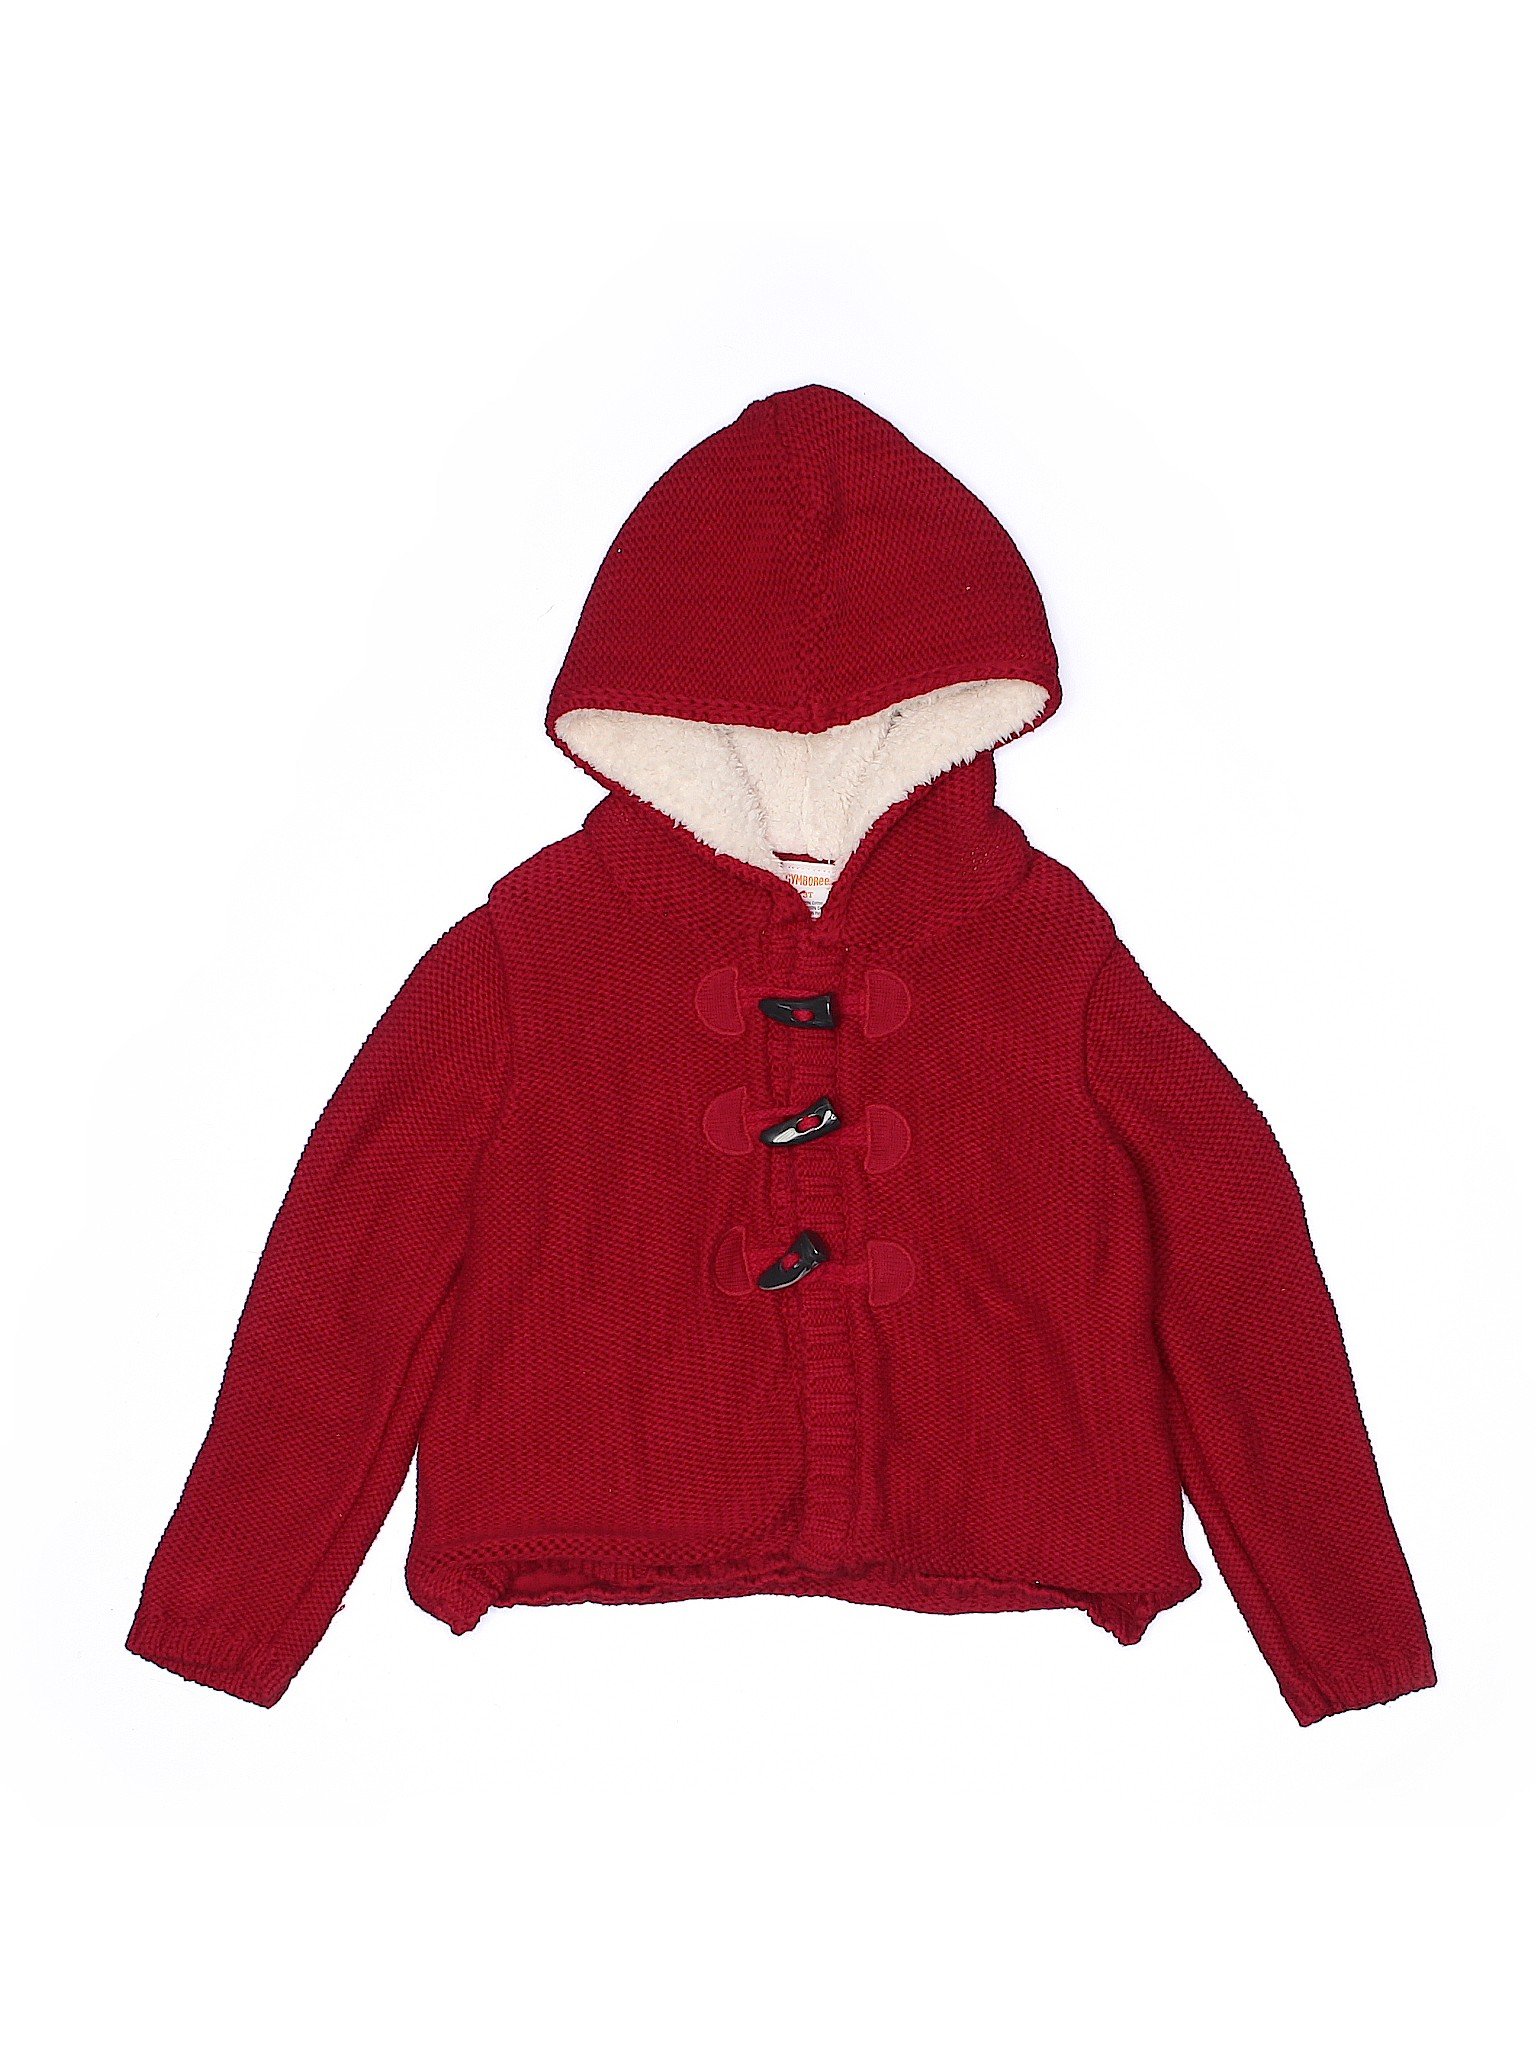 Gymboree Girls Red Jacket 3T | eBay